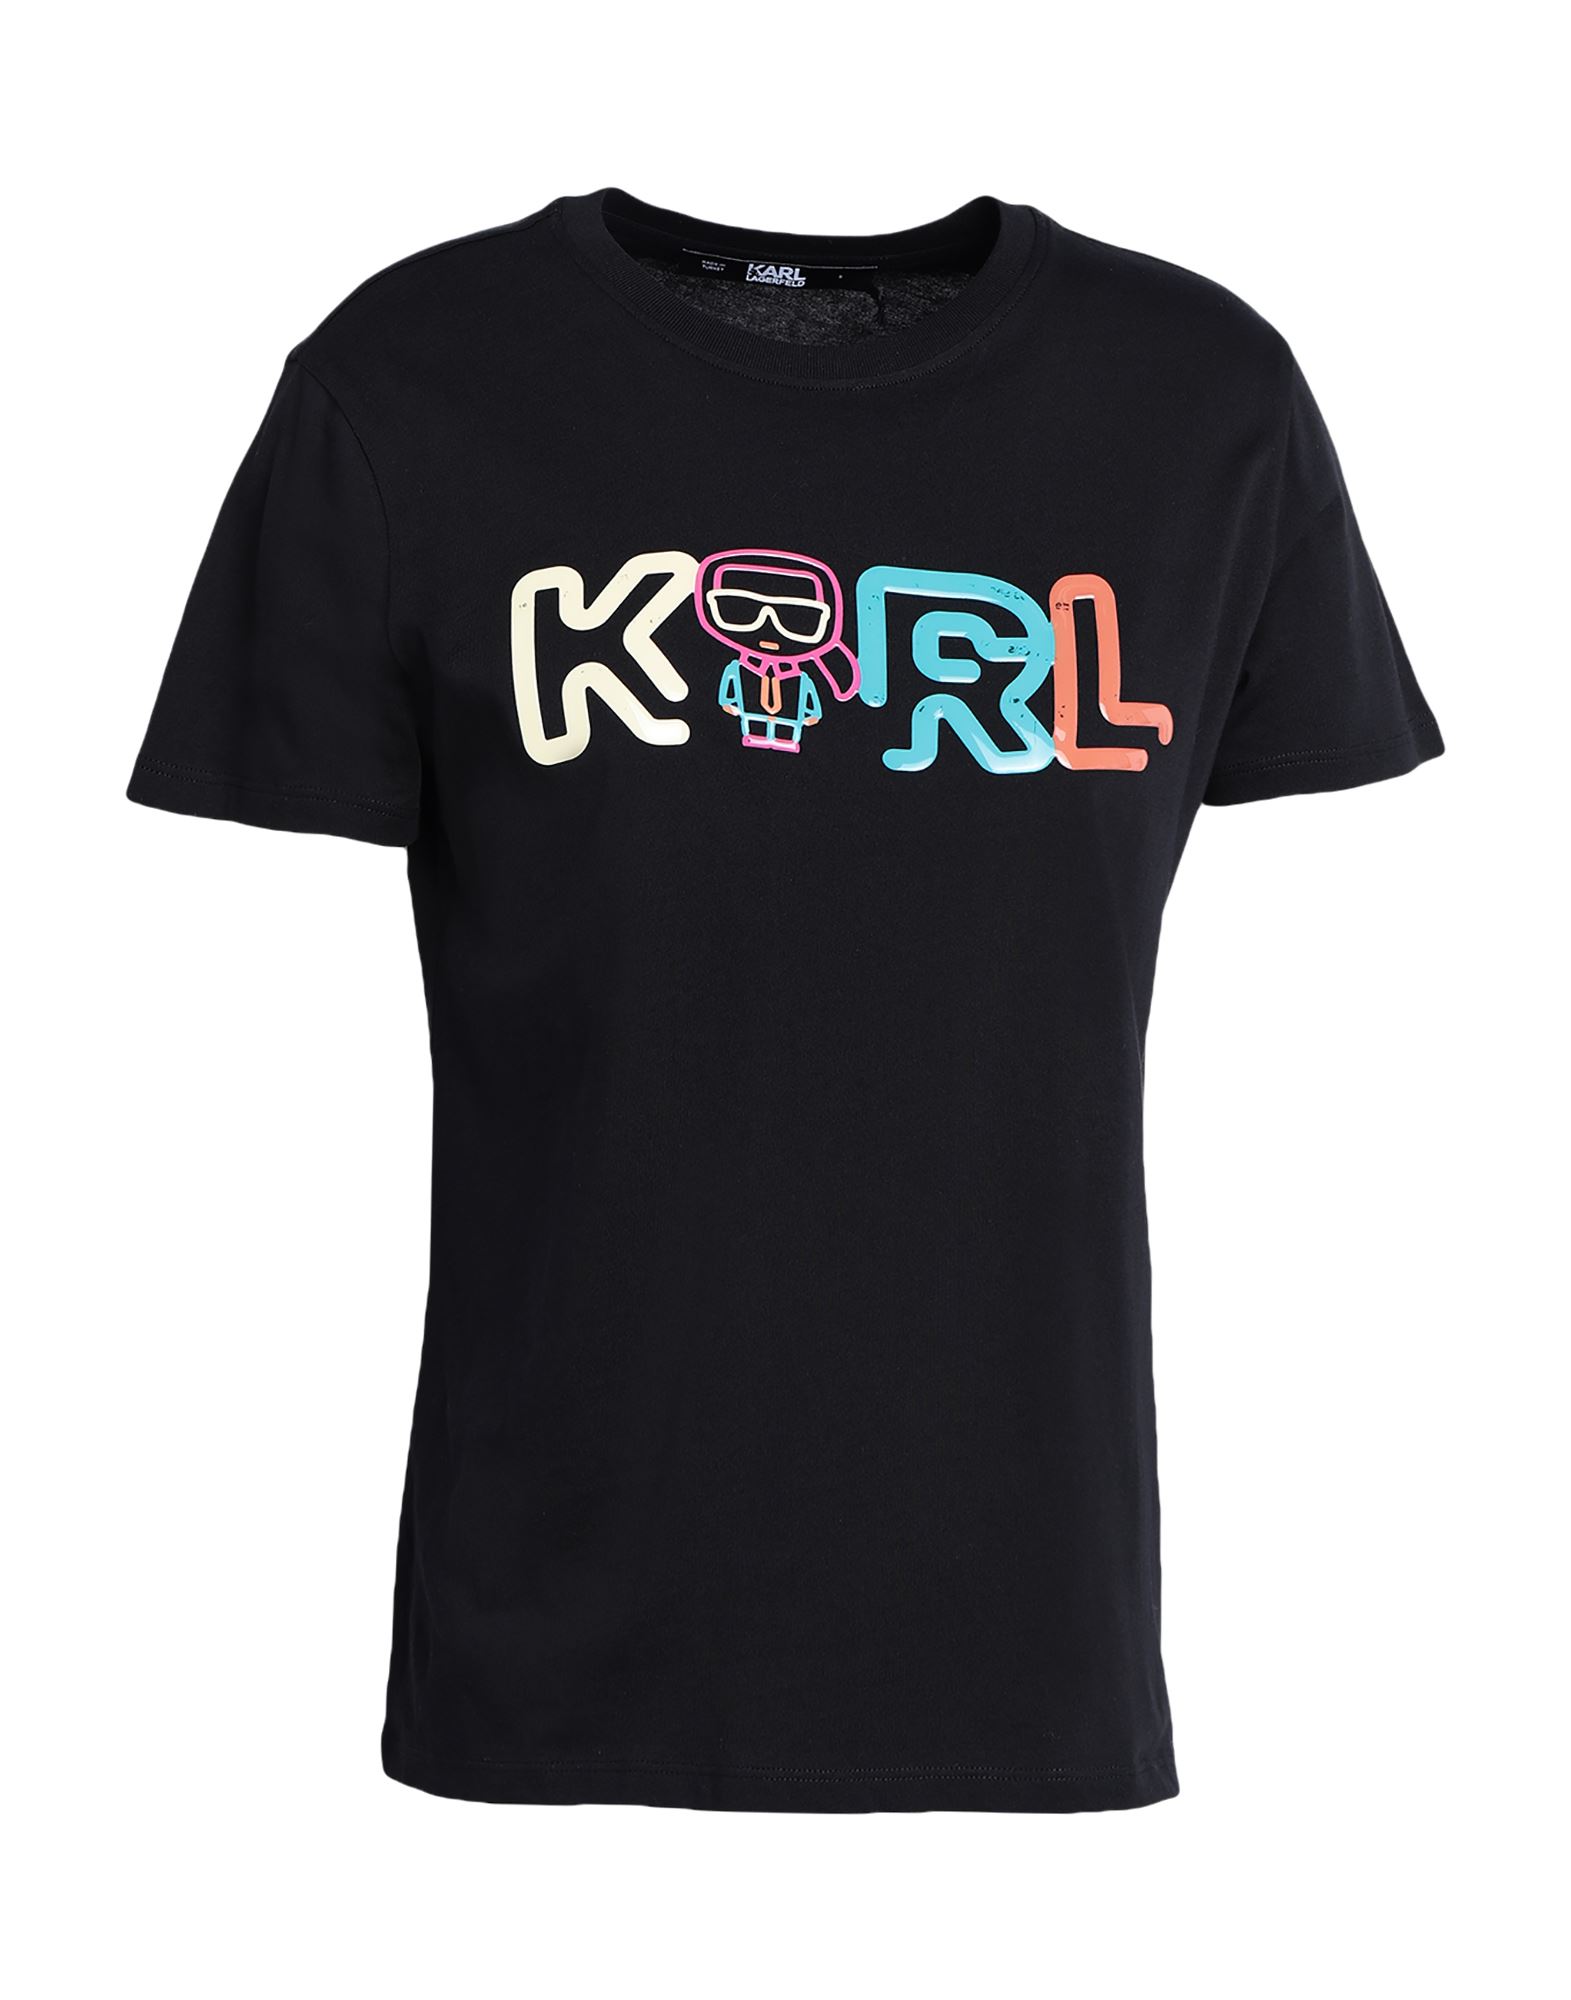 Karl Lagerfeld T-shirts In Black